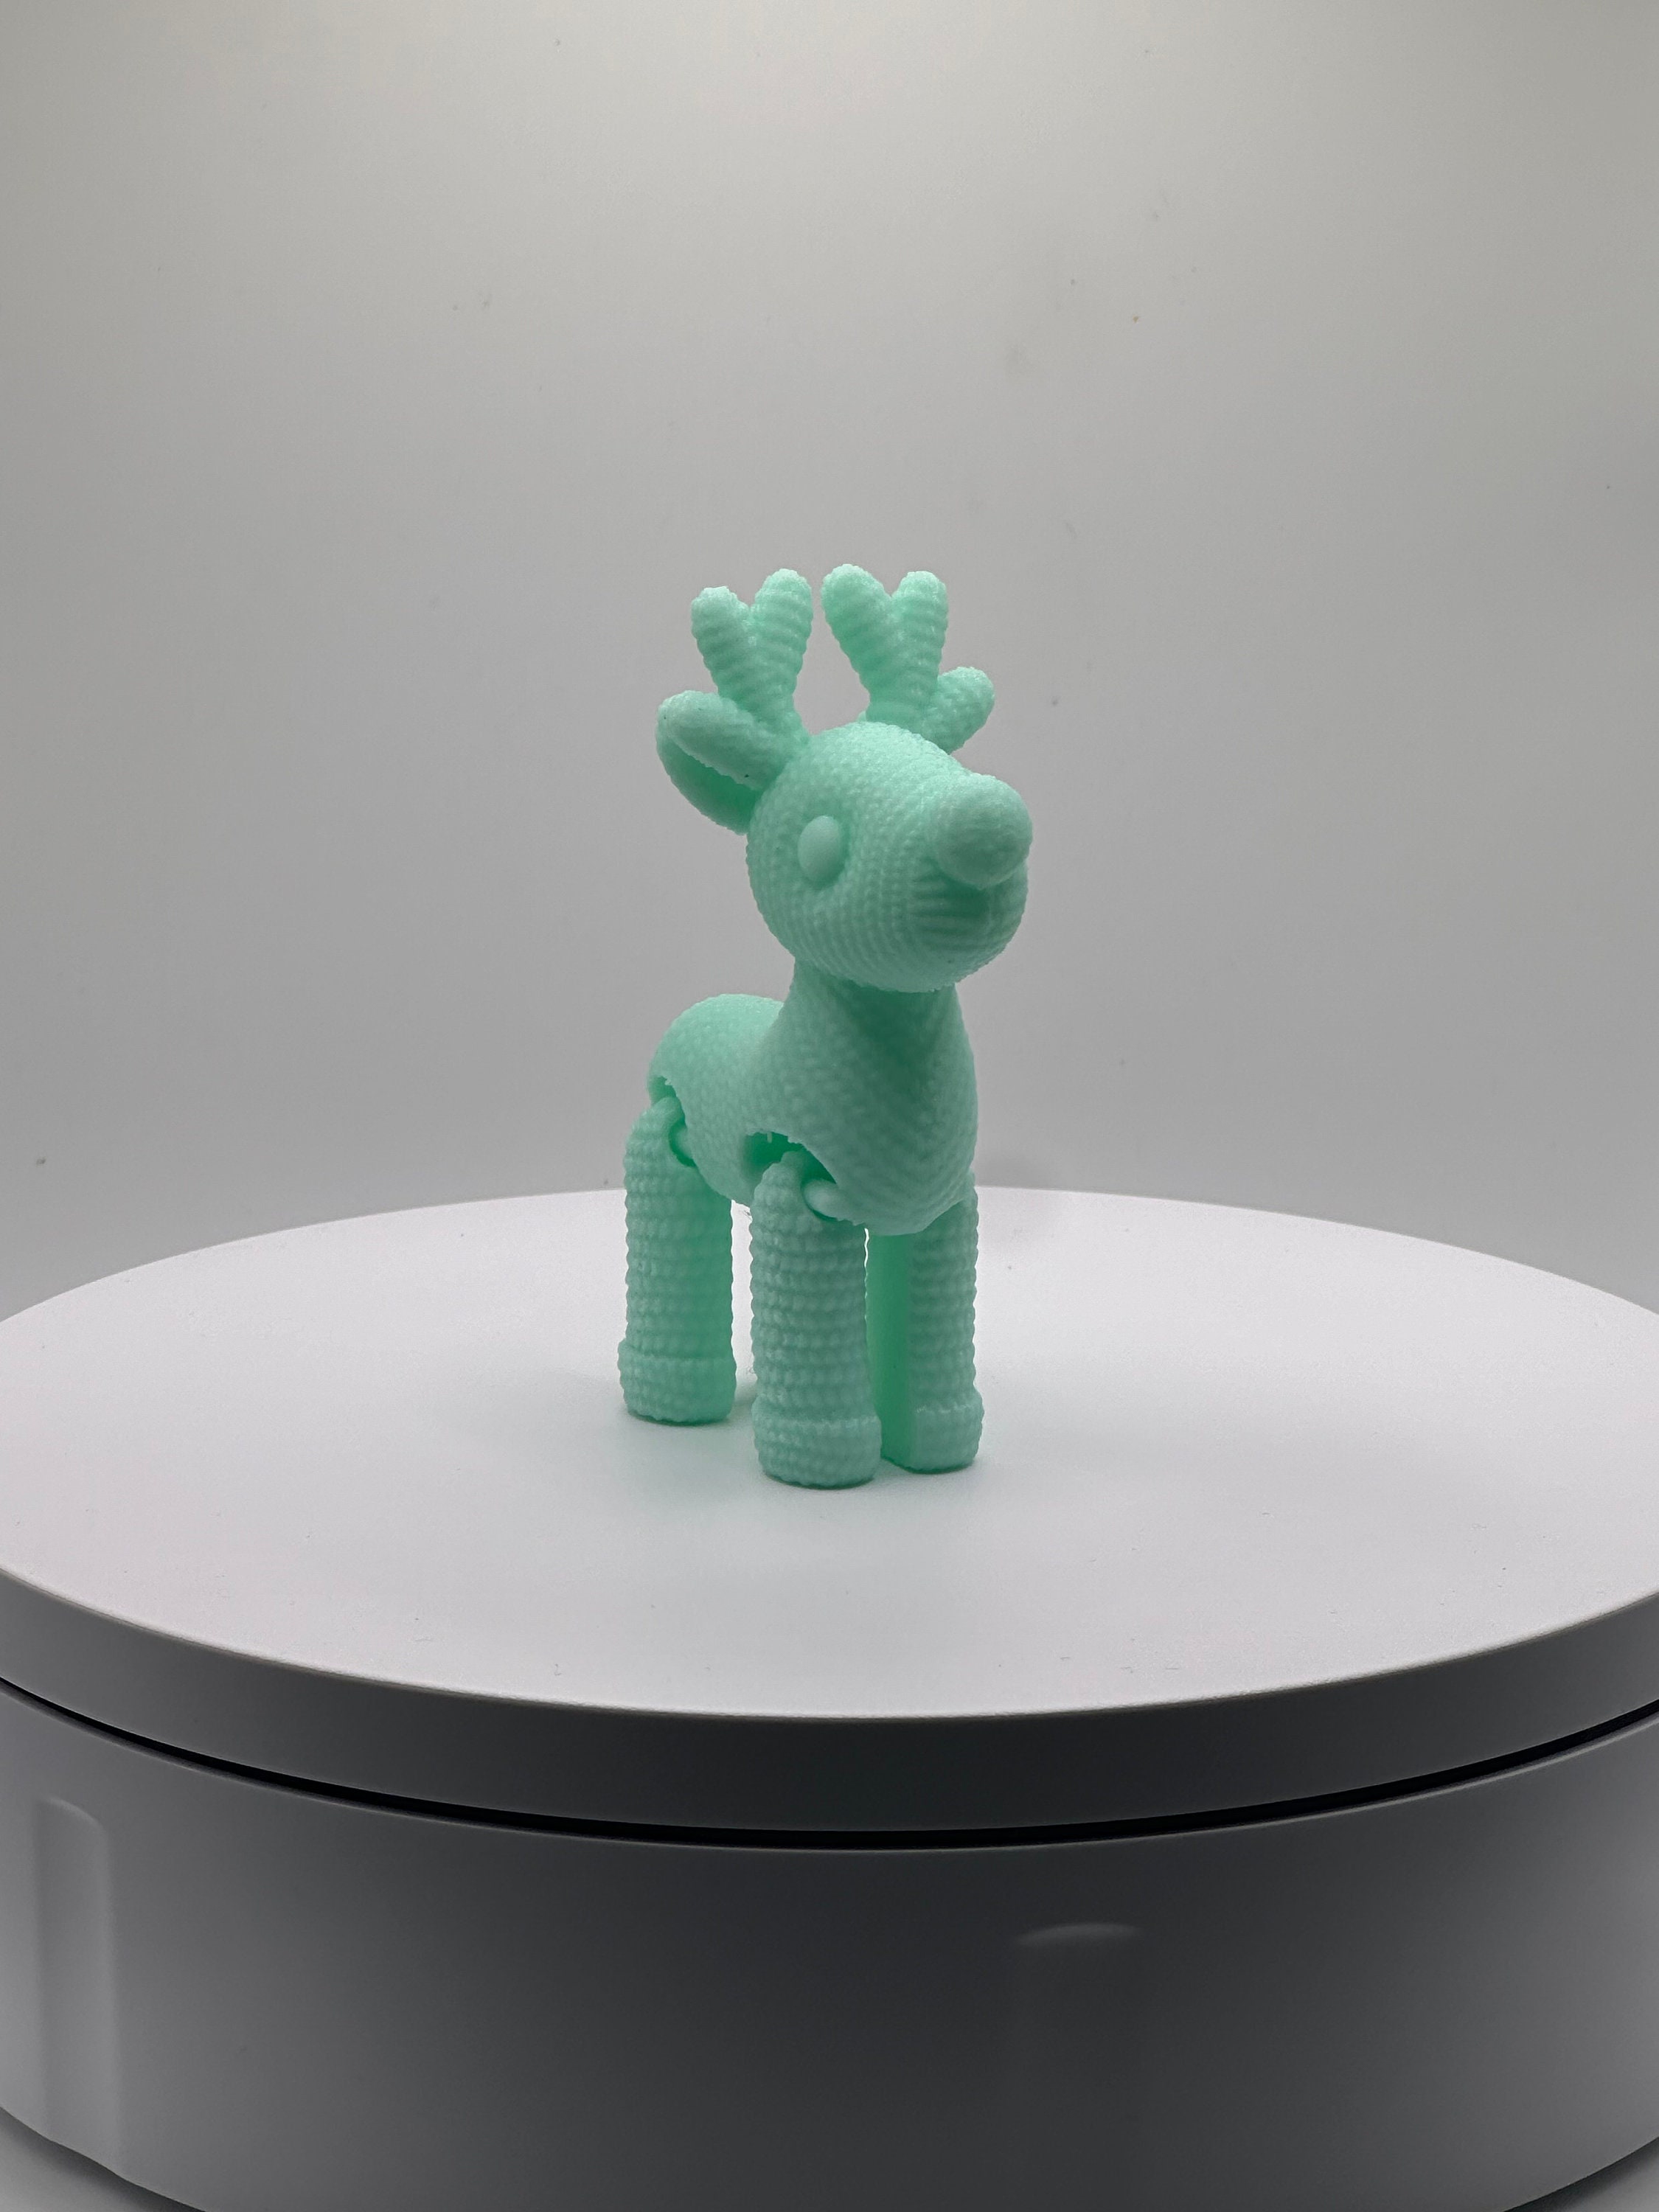 Buy the Best 3D Printer Files Online - Nikko Industries — Nikko